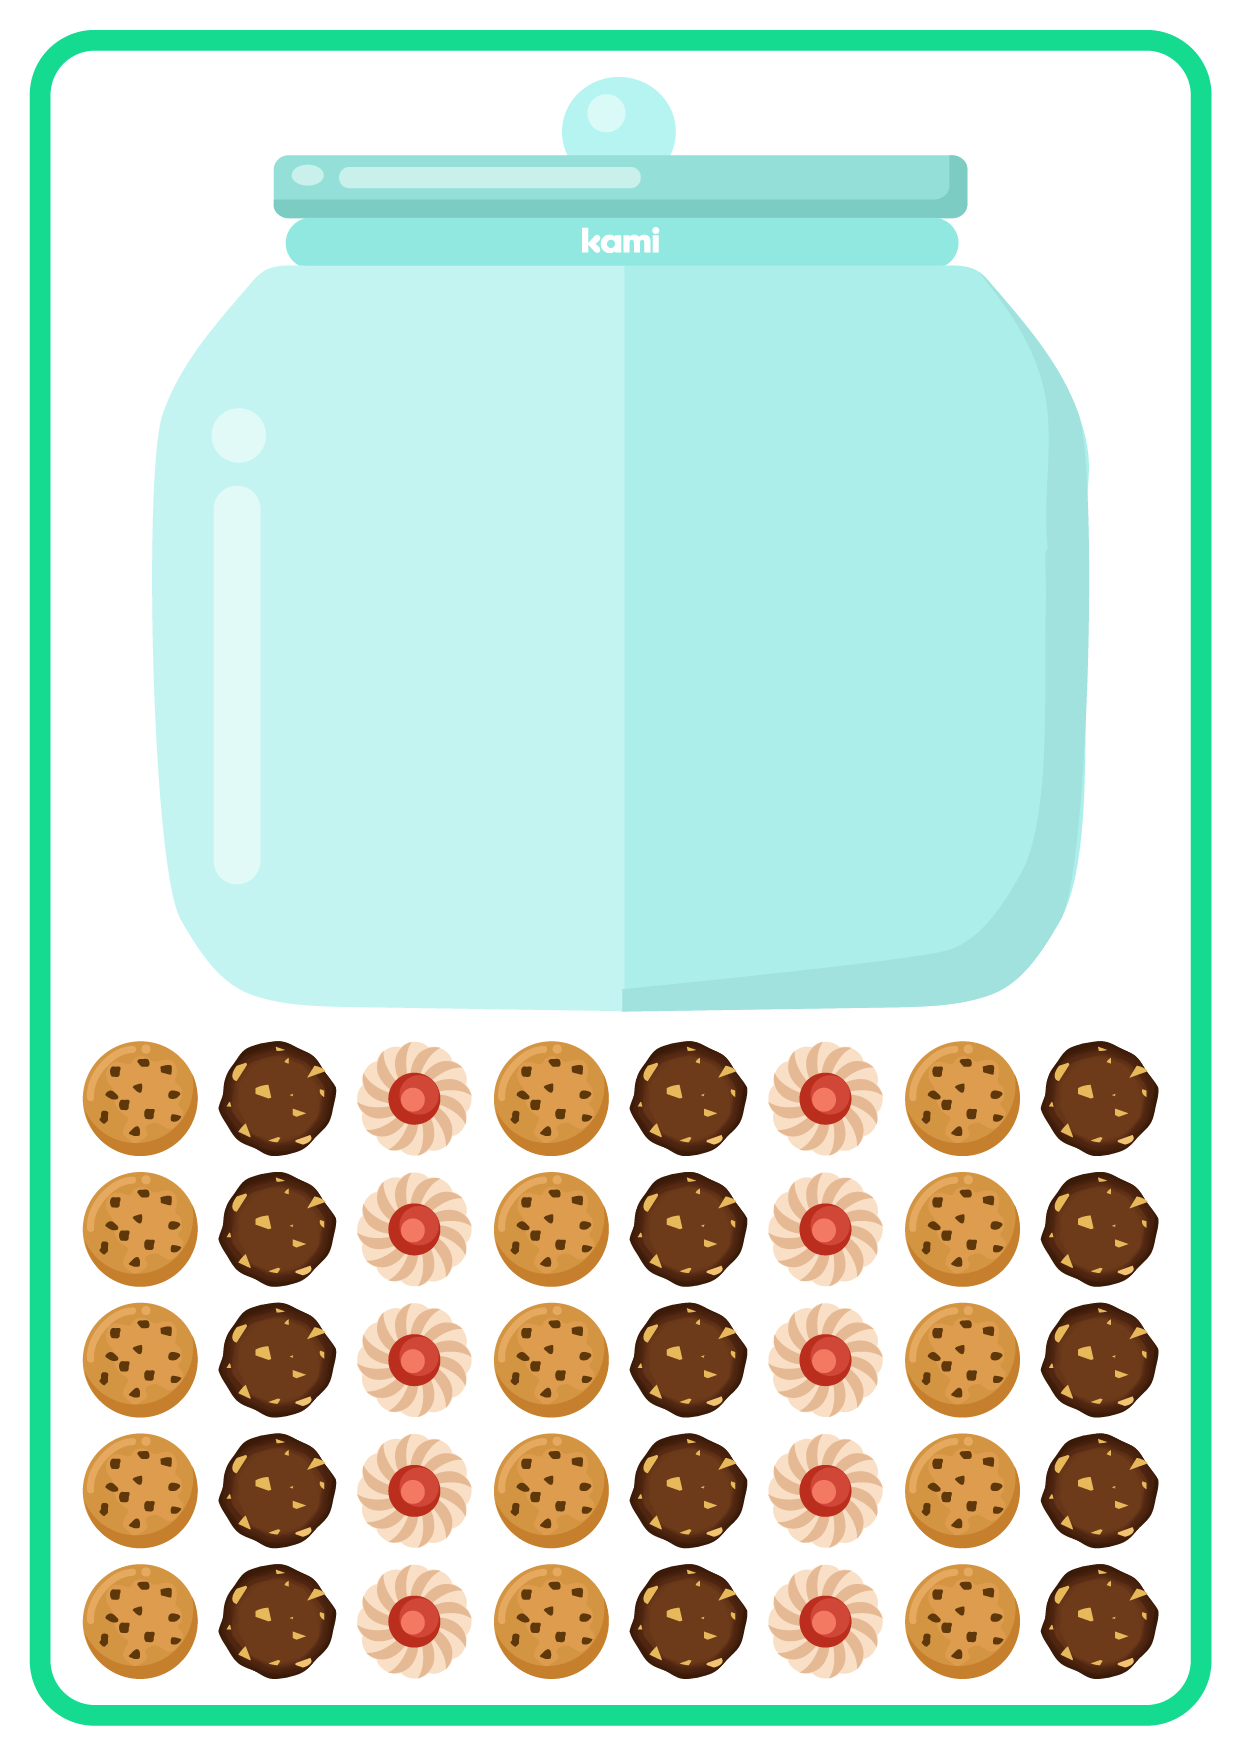 cookie jar outline